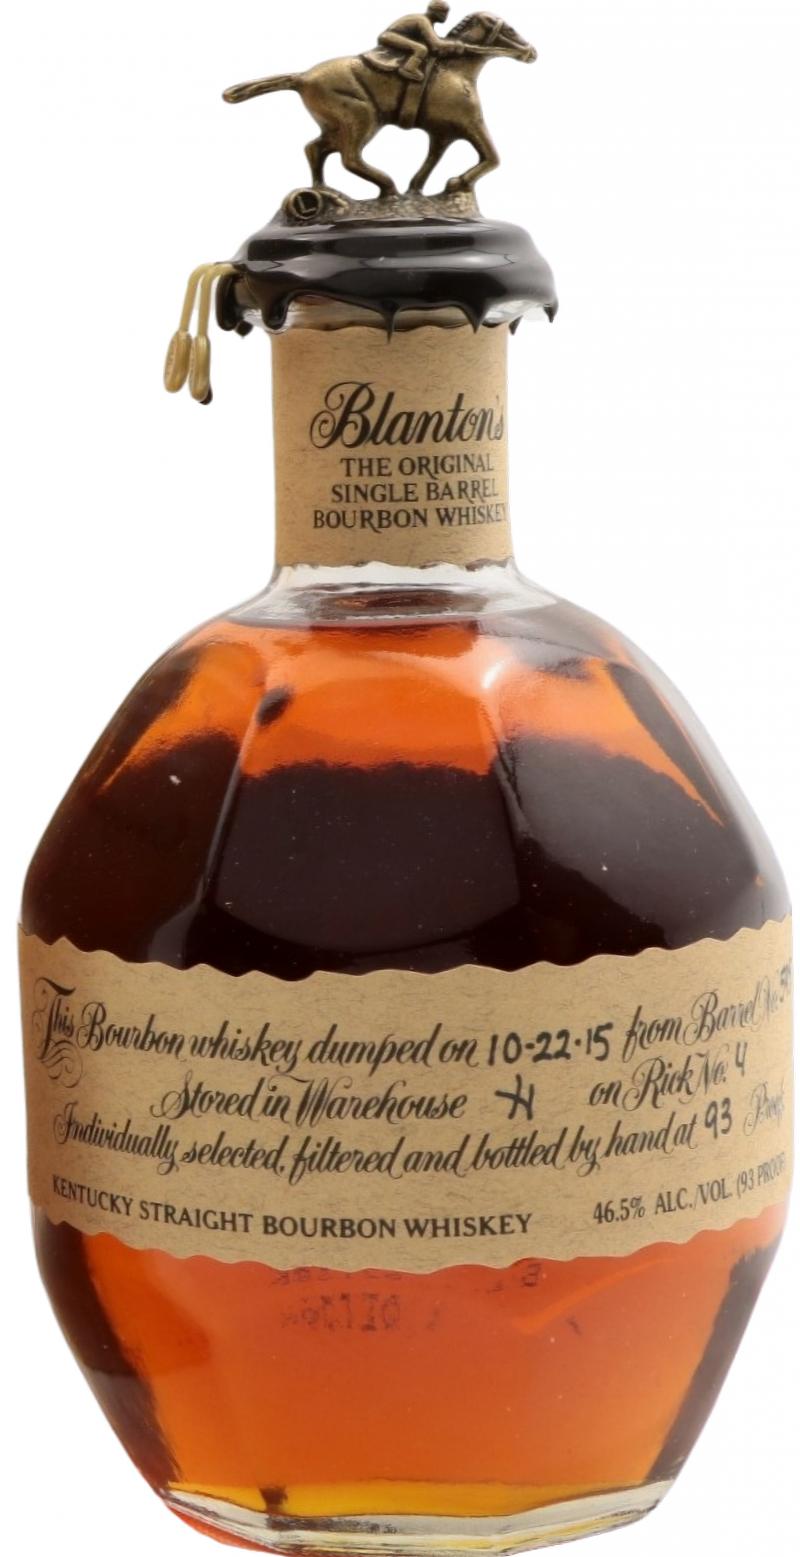 Blanton's The Original Single Barrel Bourbon Whisky #4 Charred American White Oak Barrel 595 46.5% 700ml